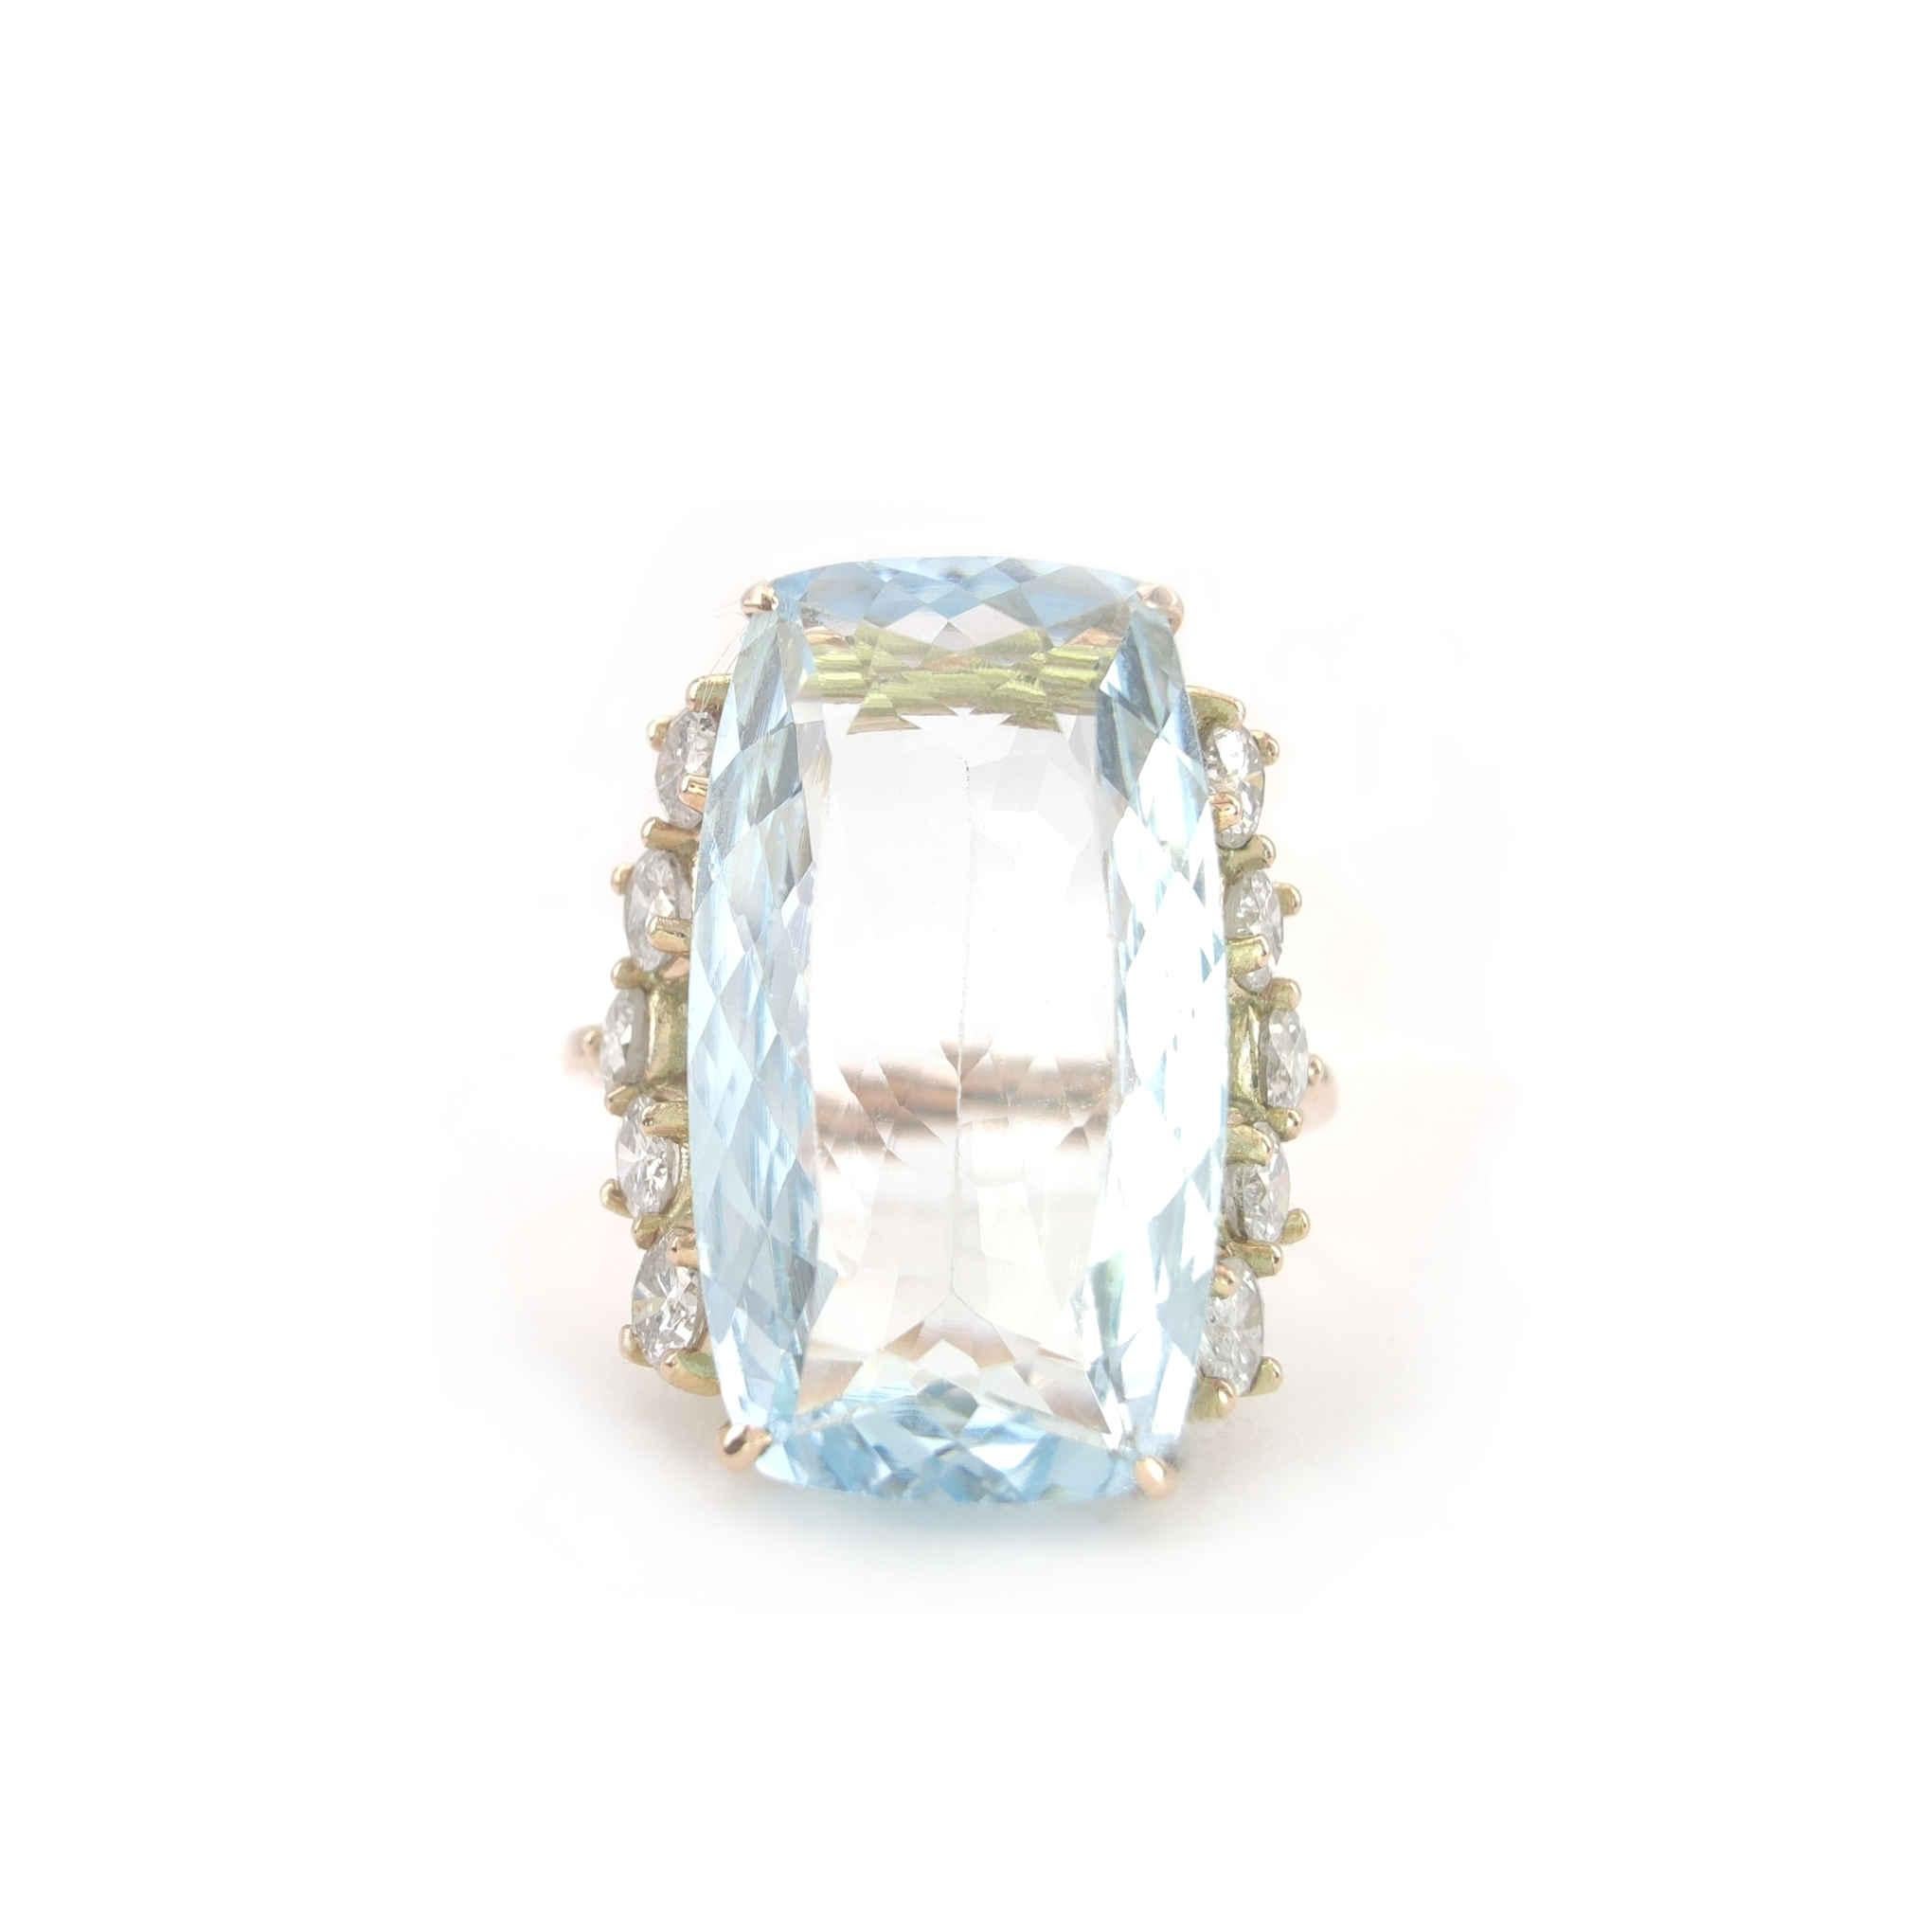 Taille coussin 5.82 Carat Aquamarine & 0.66 carats Diamond 14K Ring - Handmade Sophistication